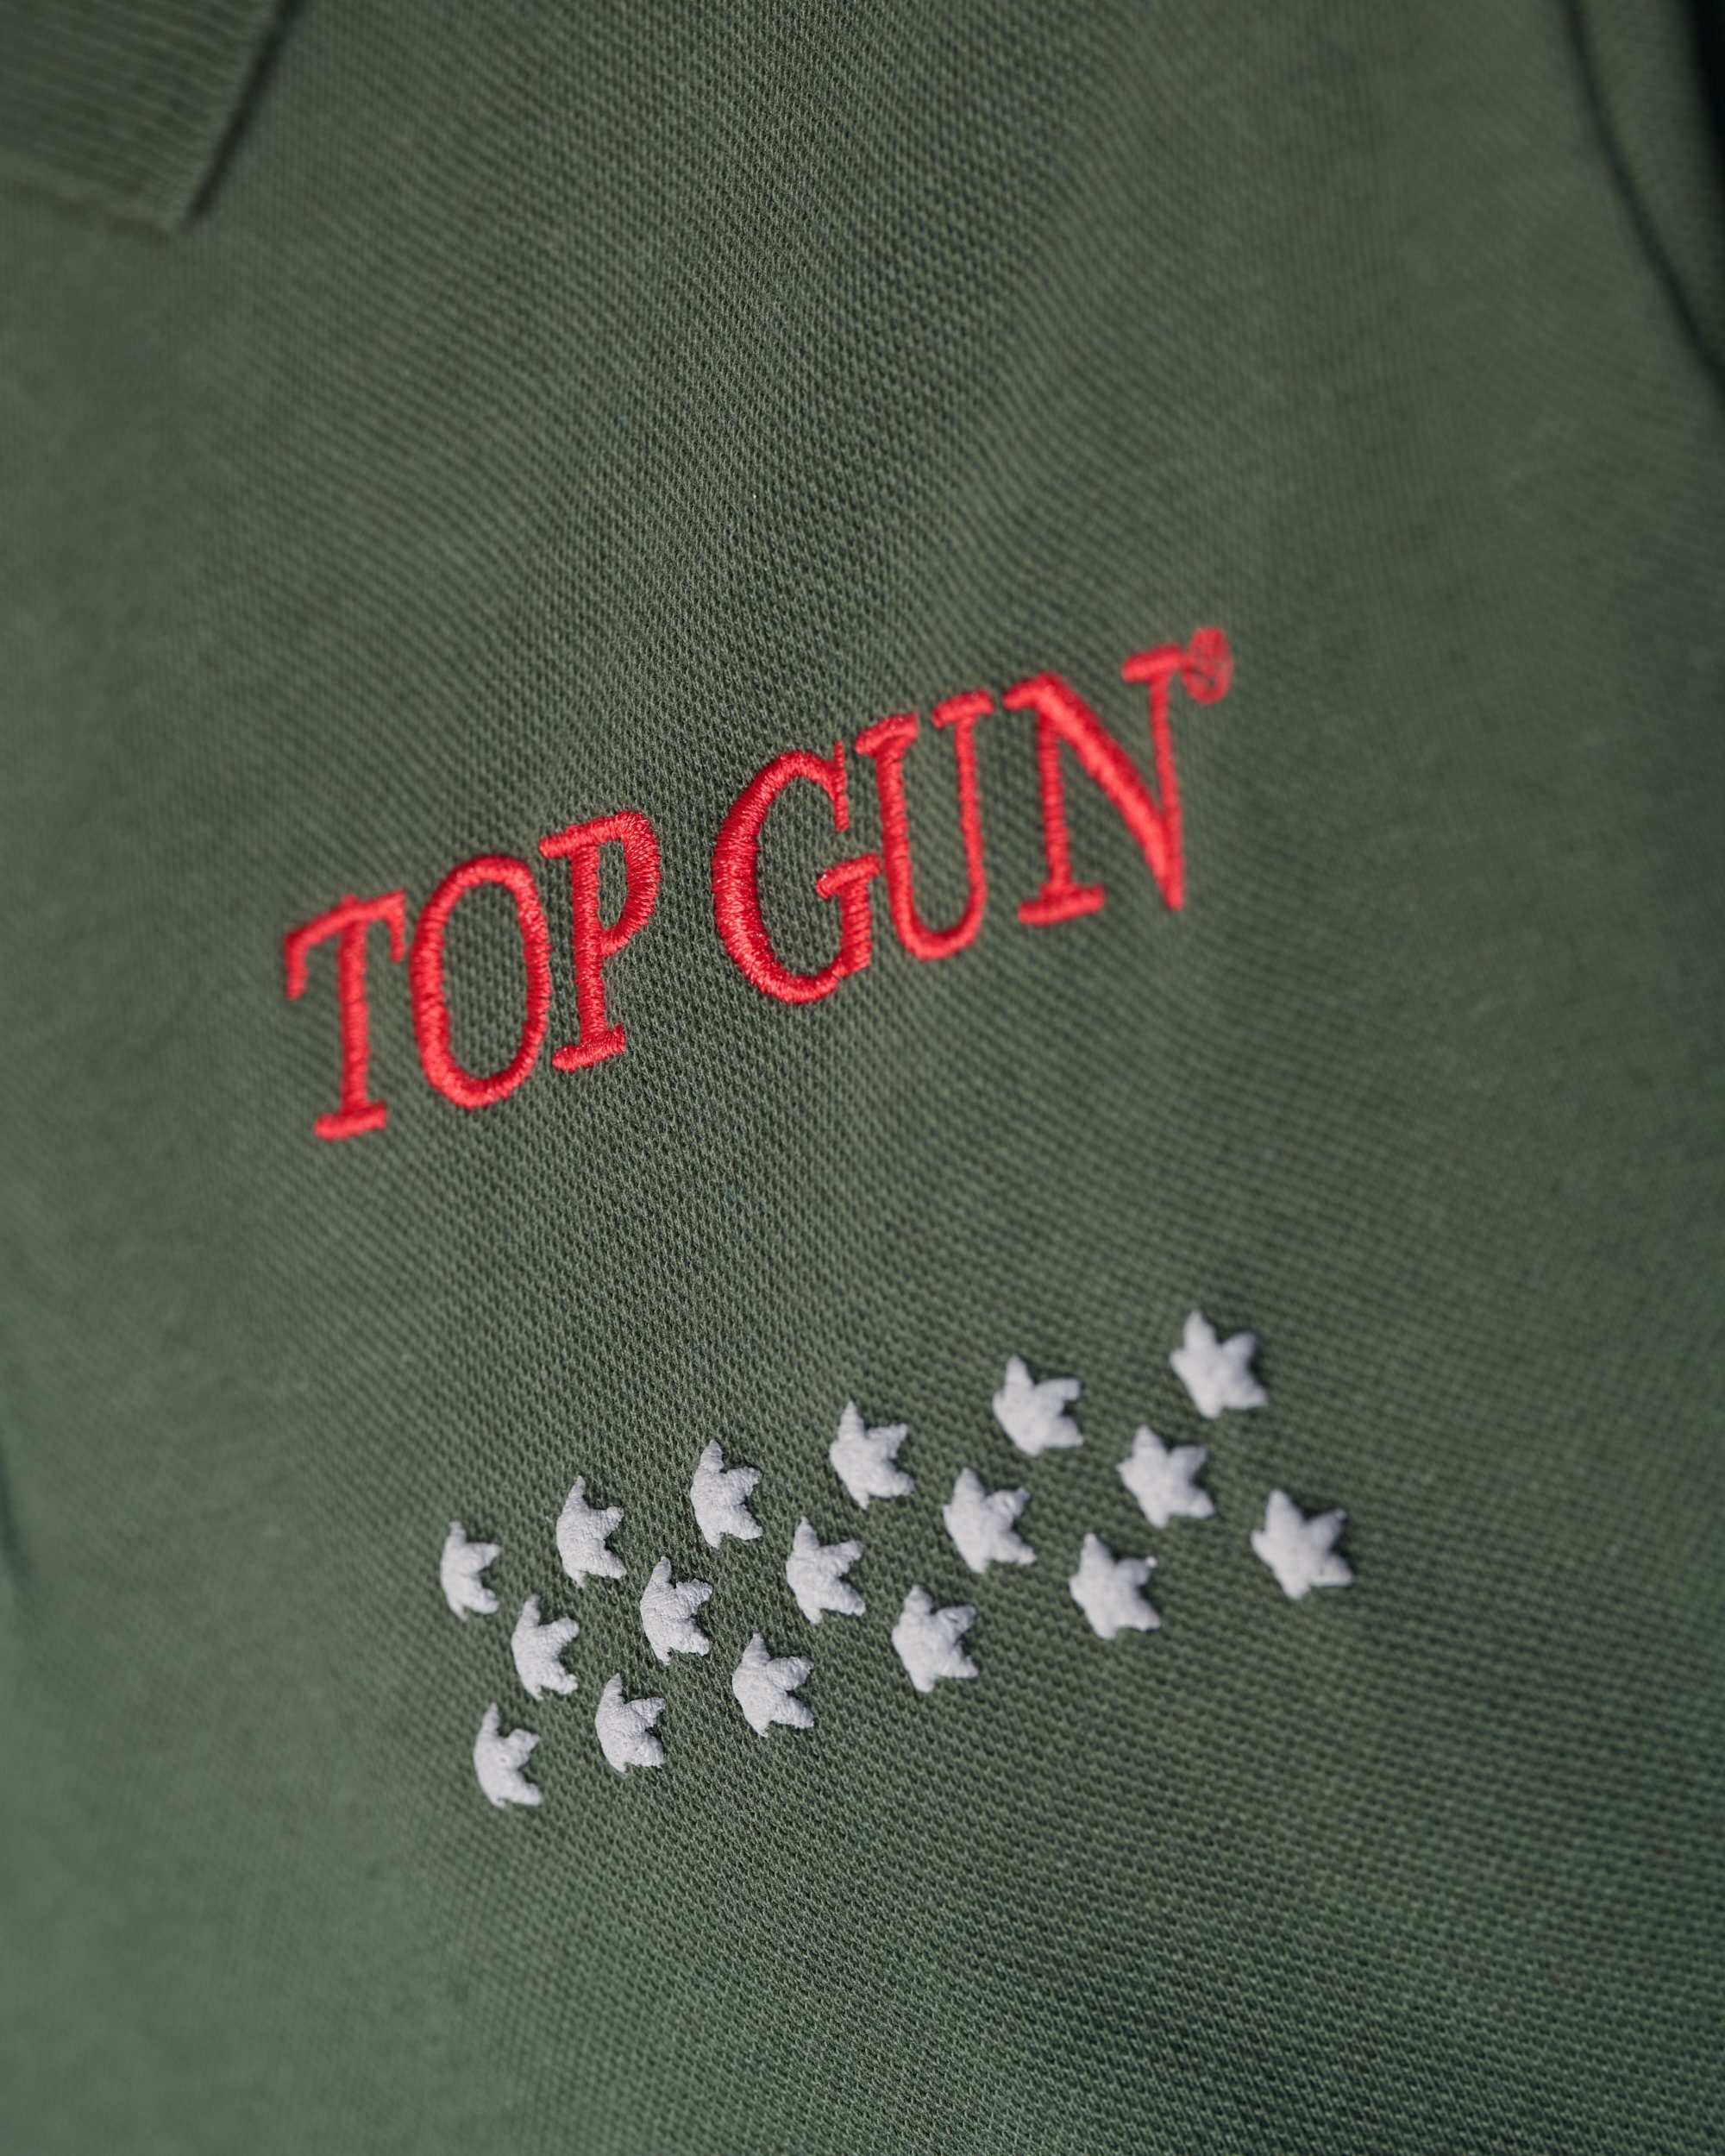 TOP T-Shirt TG20213004 GUN oliv